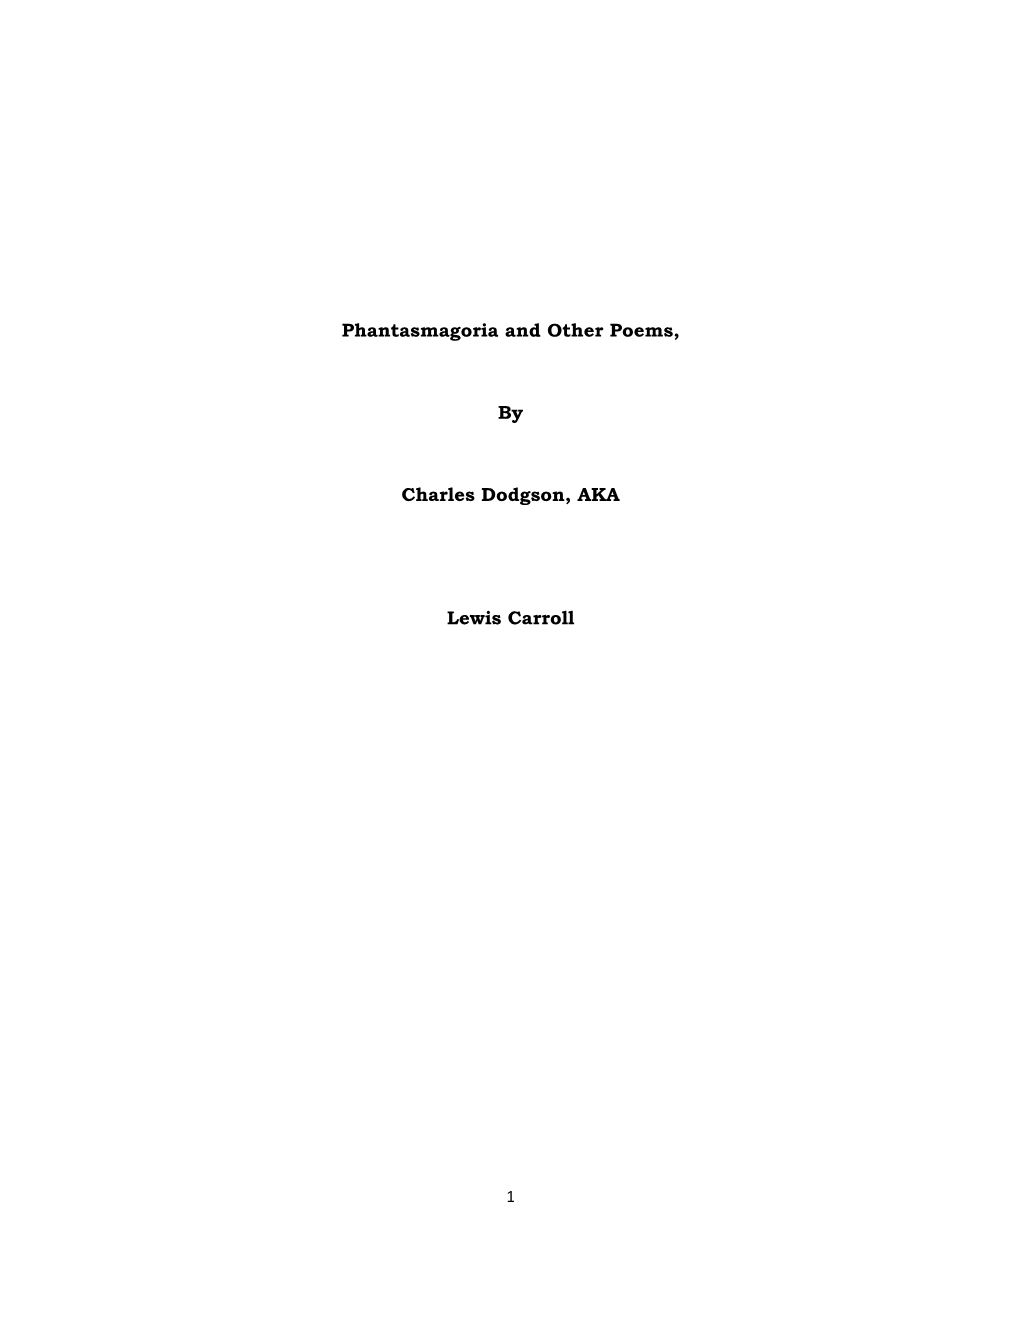 Phantasmagoria and Other Poems, by Charles Dodgson, AKA Lewis Carroll